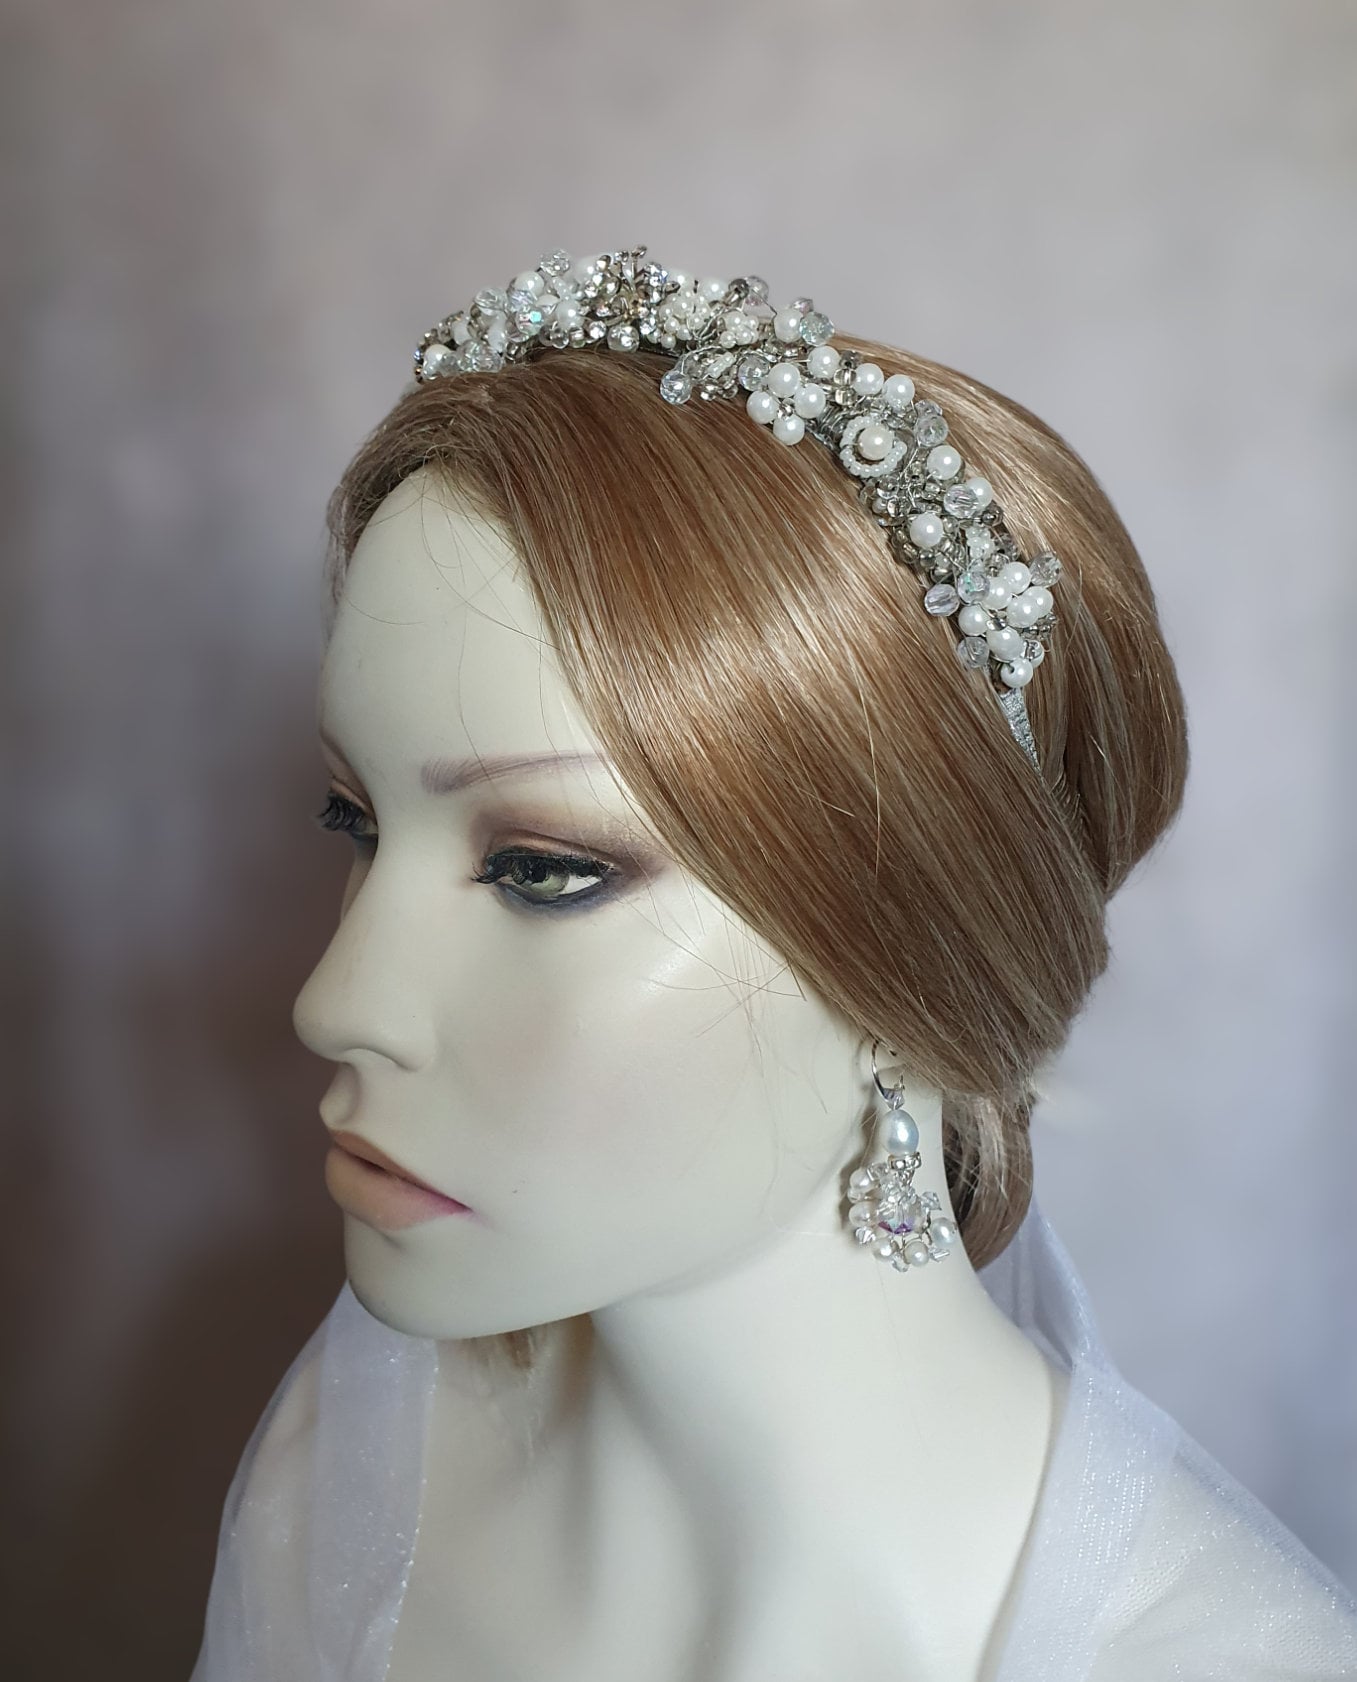 Bruiloft tiara met kristallen stenen en parels, handgemaakt, bruids tiara, bruids diaeem, bruids tiara, dames tiara, speciale gebeurtenis